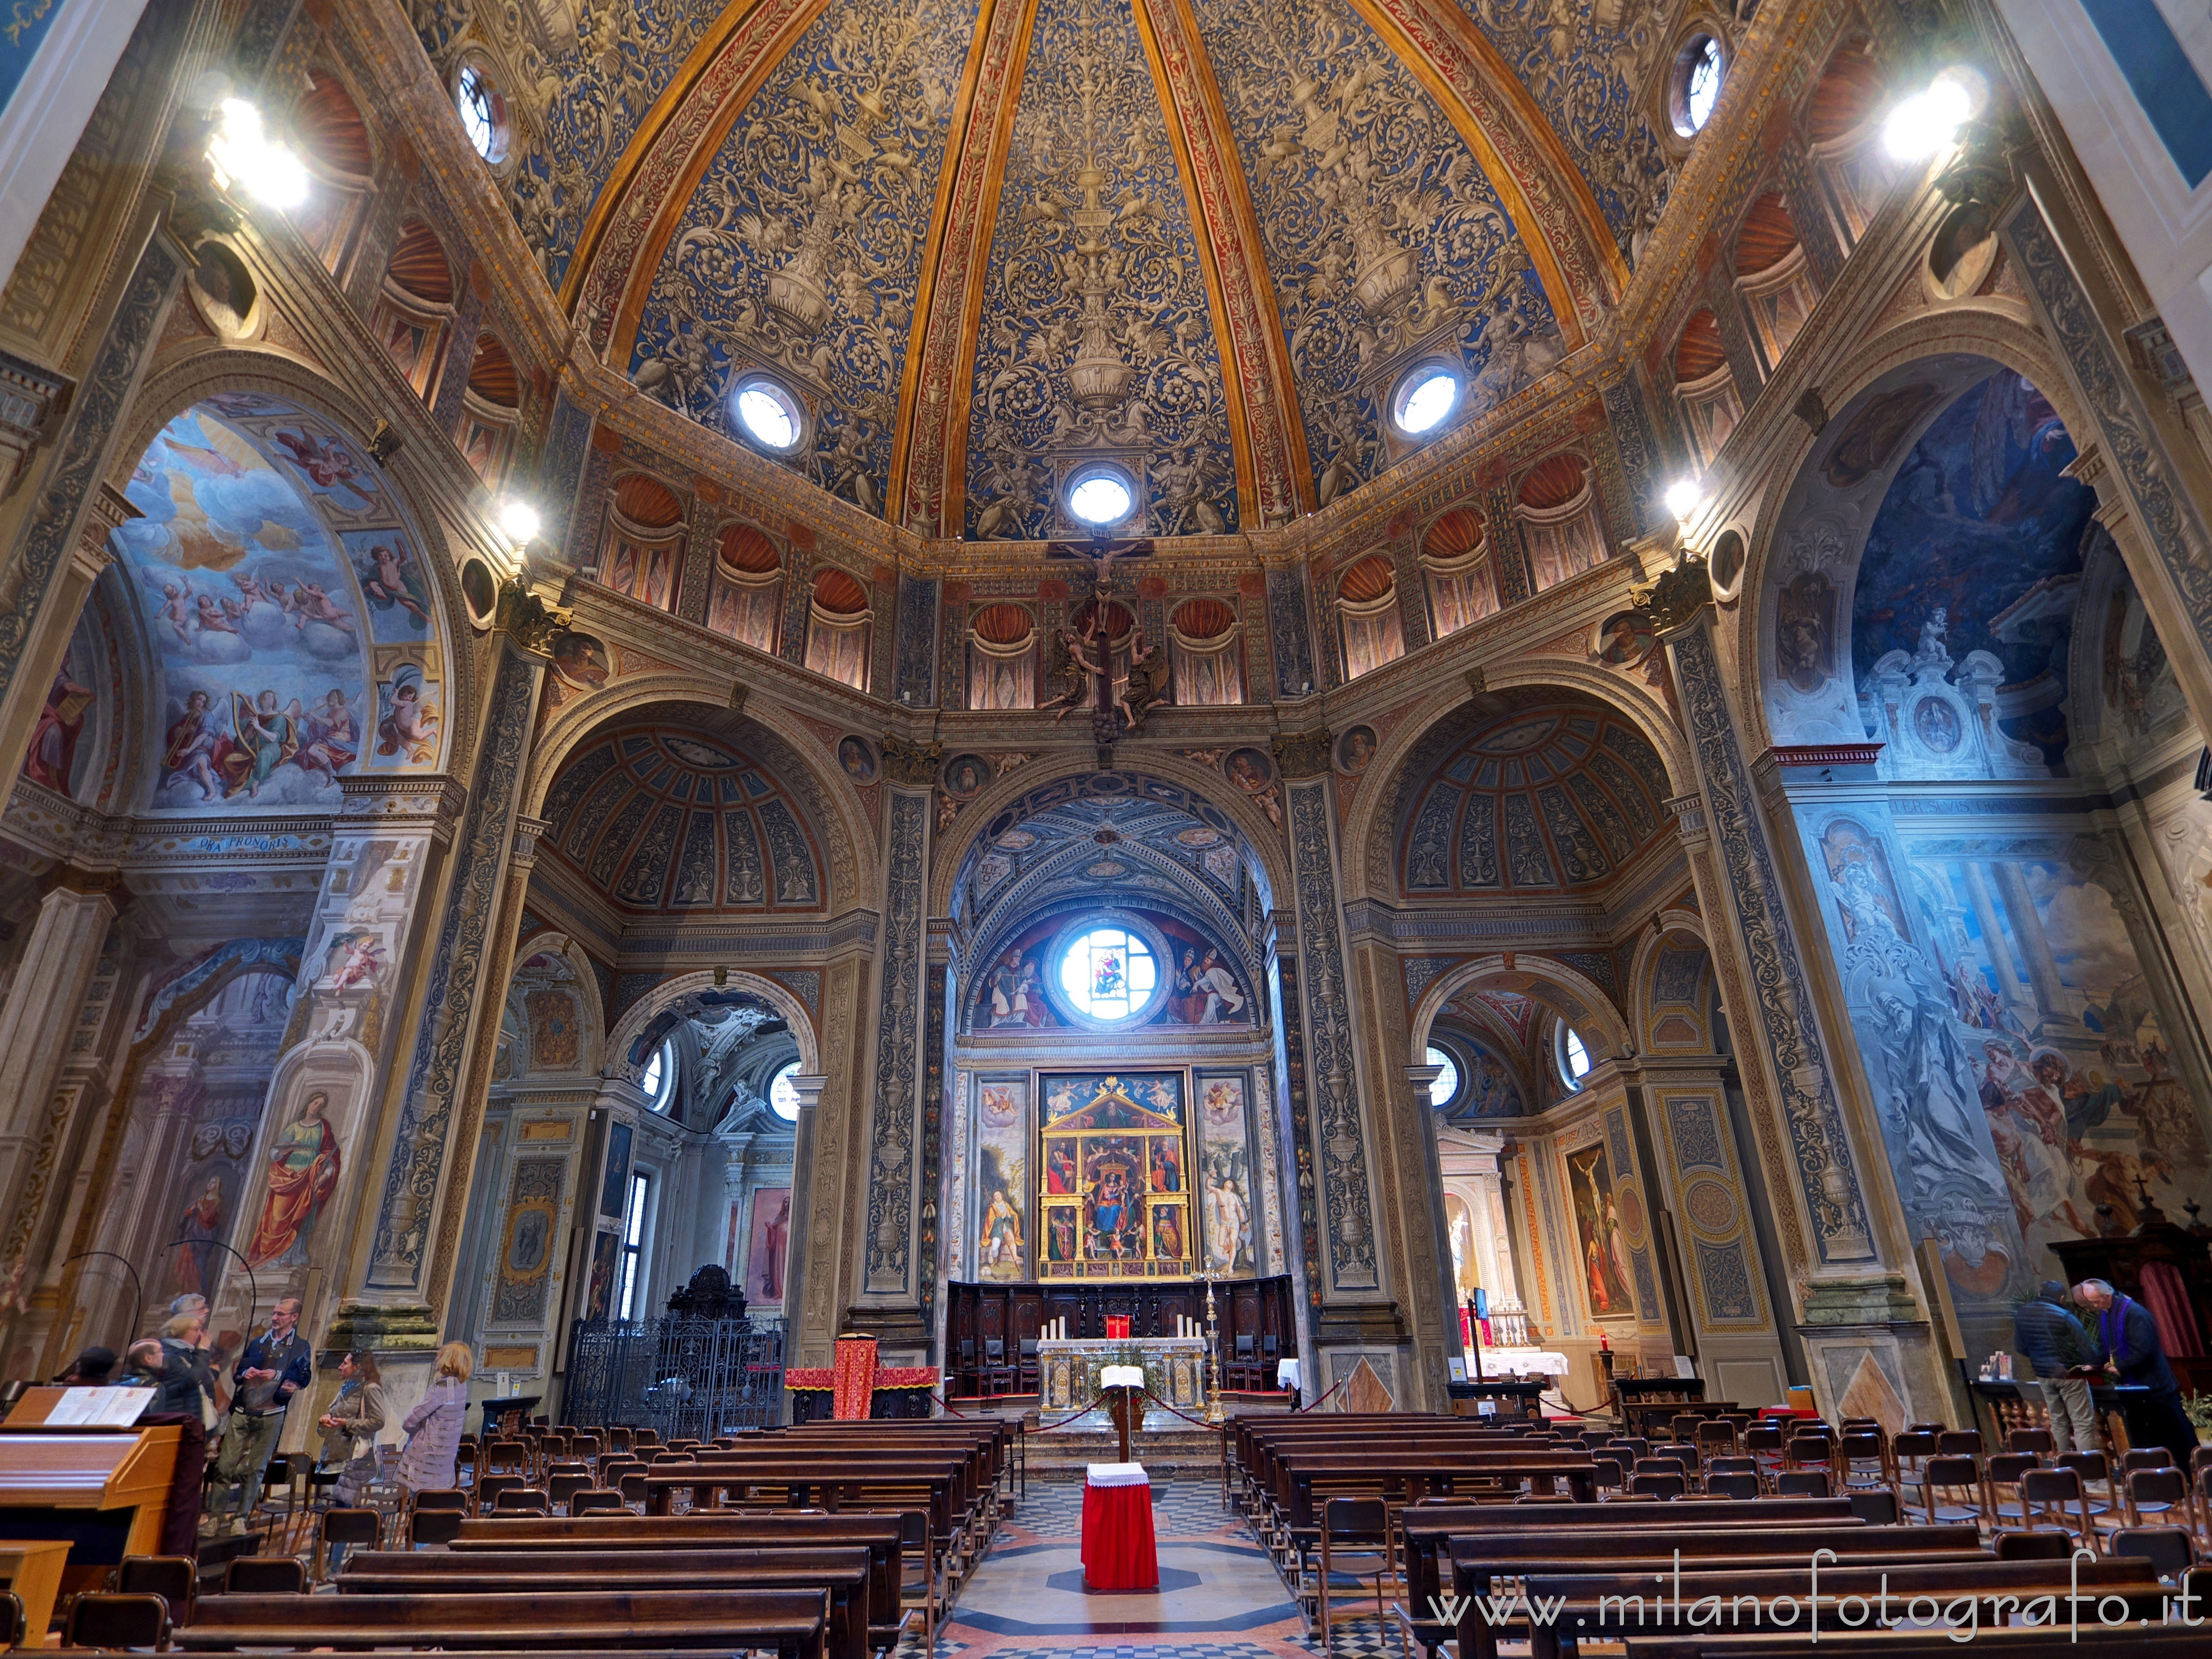 Legnano (Milan, Italy): Panoramic view of the interior of the Basilica of San Magno - Legnano (Milan, Italy)